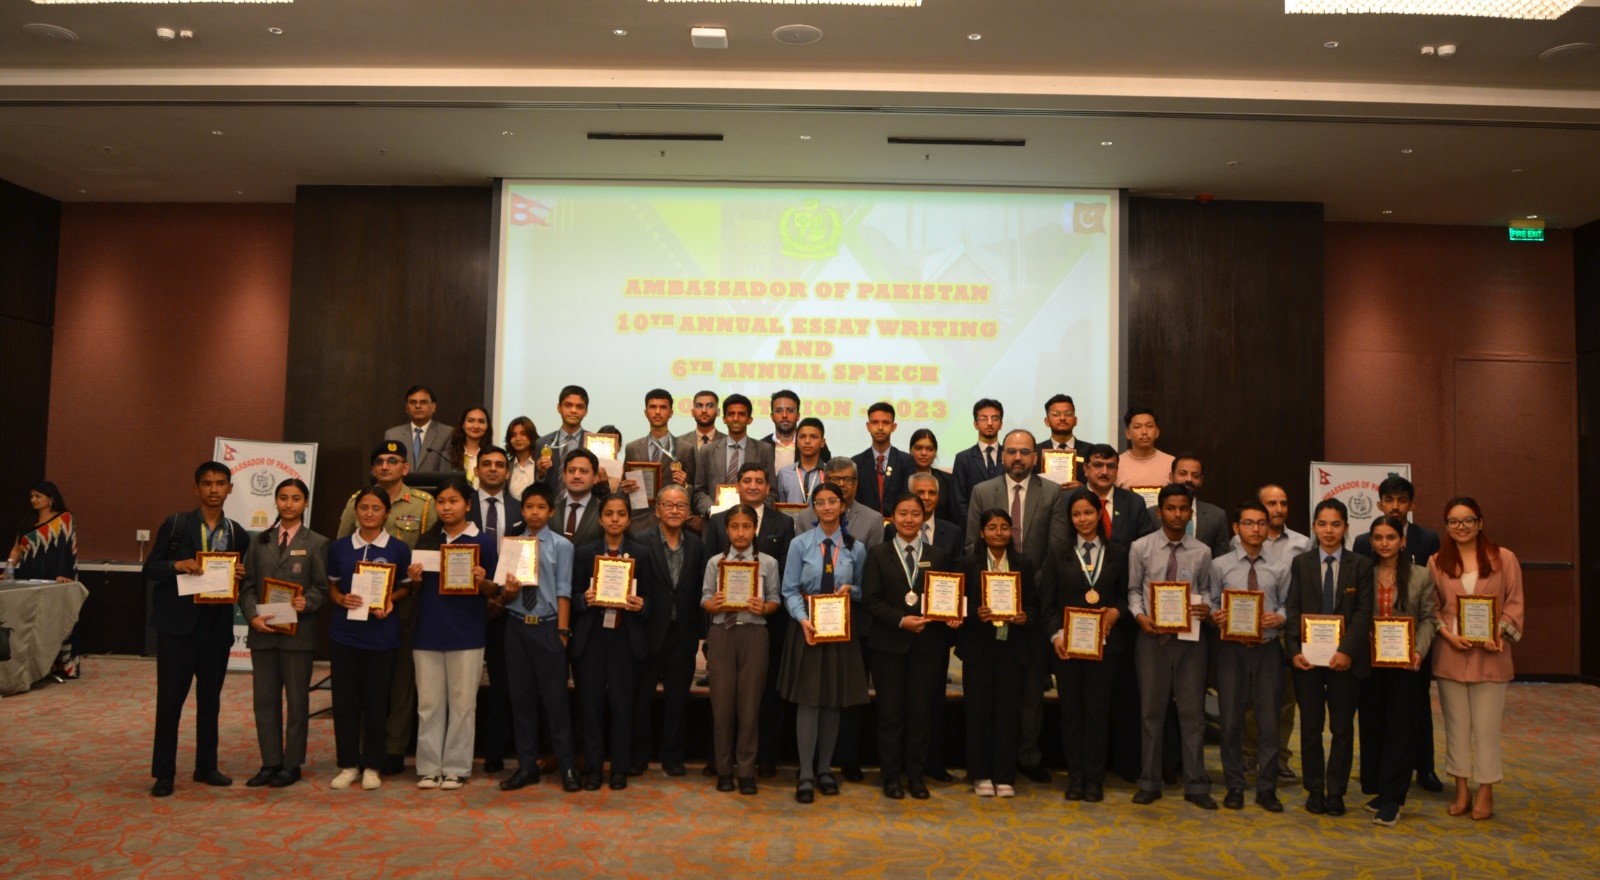 Pakistani Embassy awards winners of essay writing and speech competitions